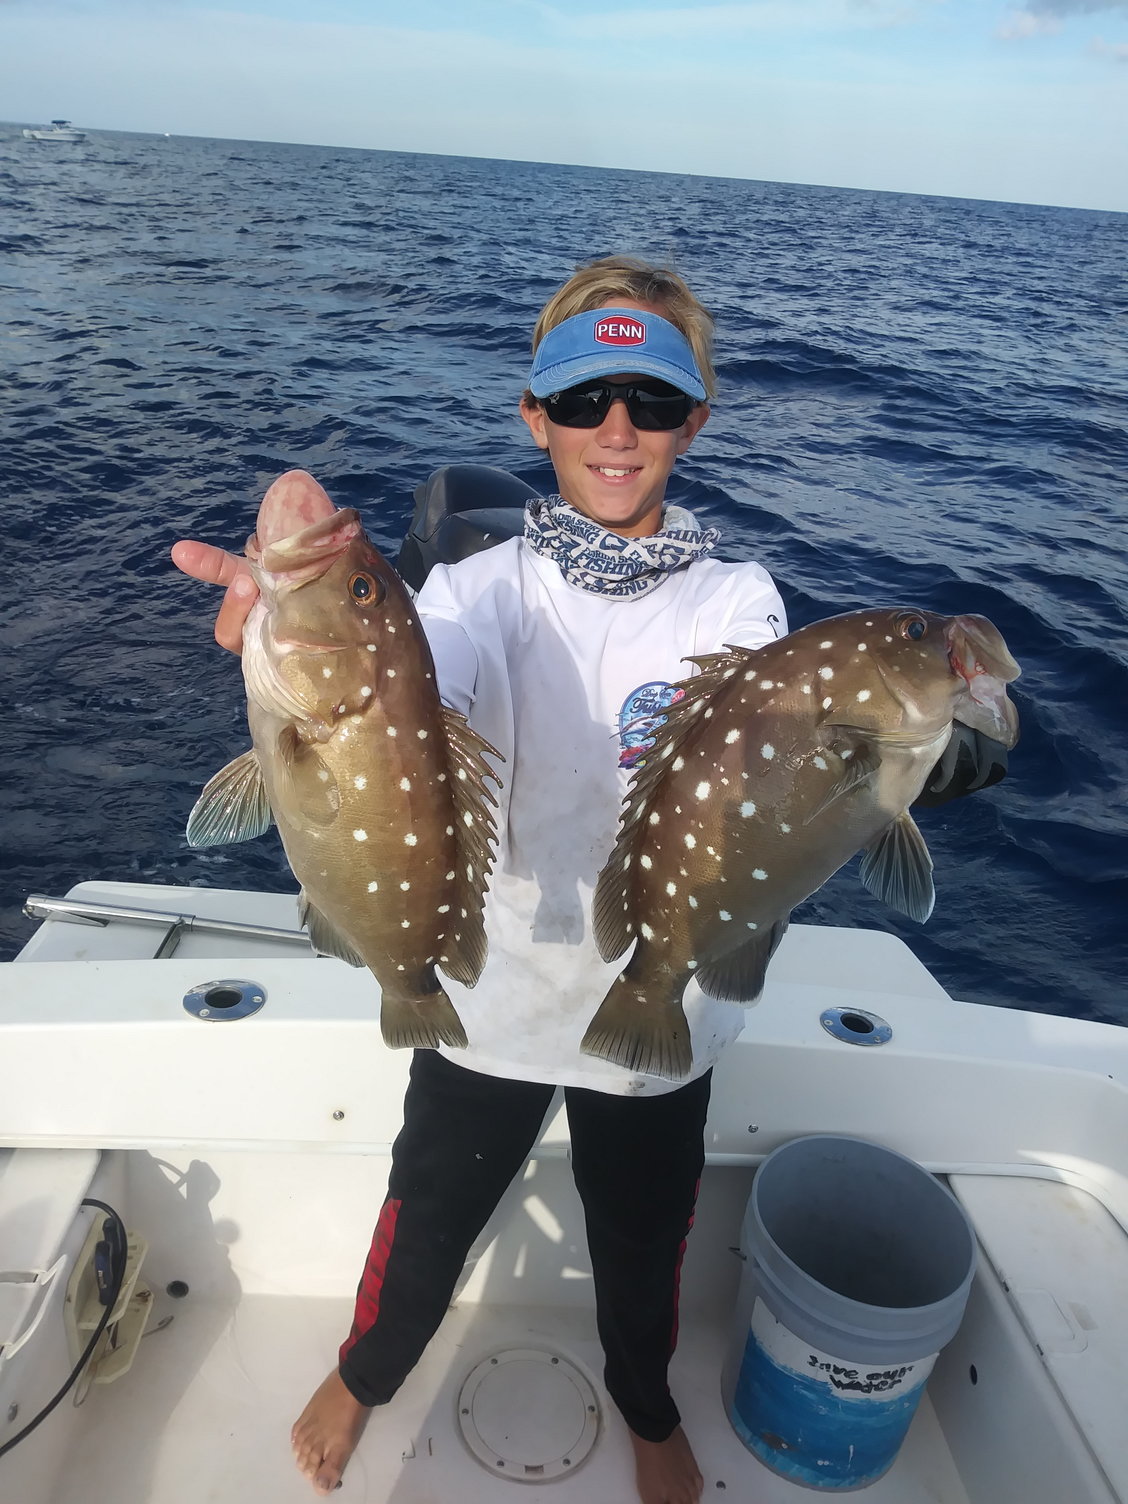 Fort Lauderdale to Miami Florida Deep Drop Fishing Spots